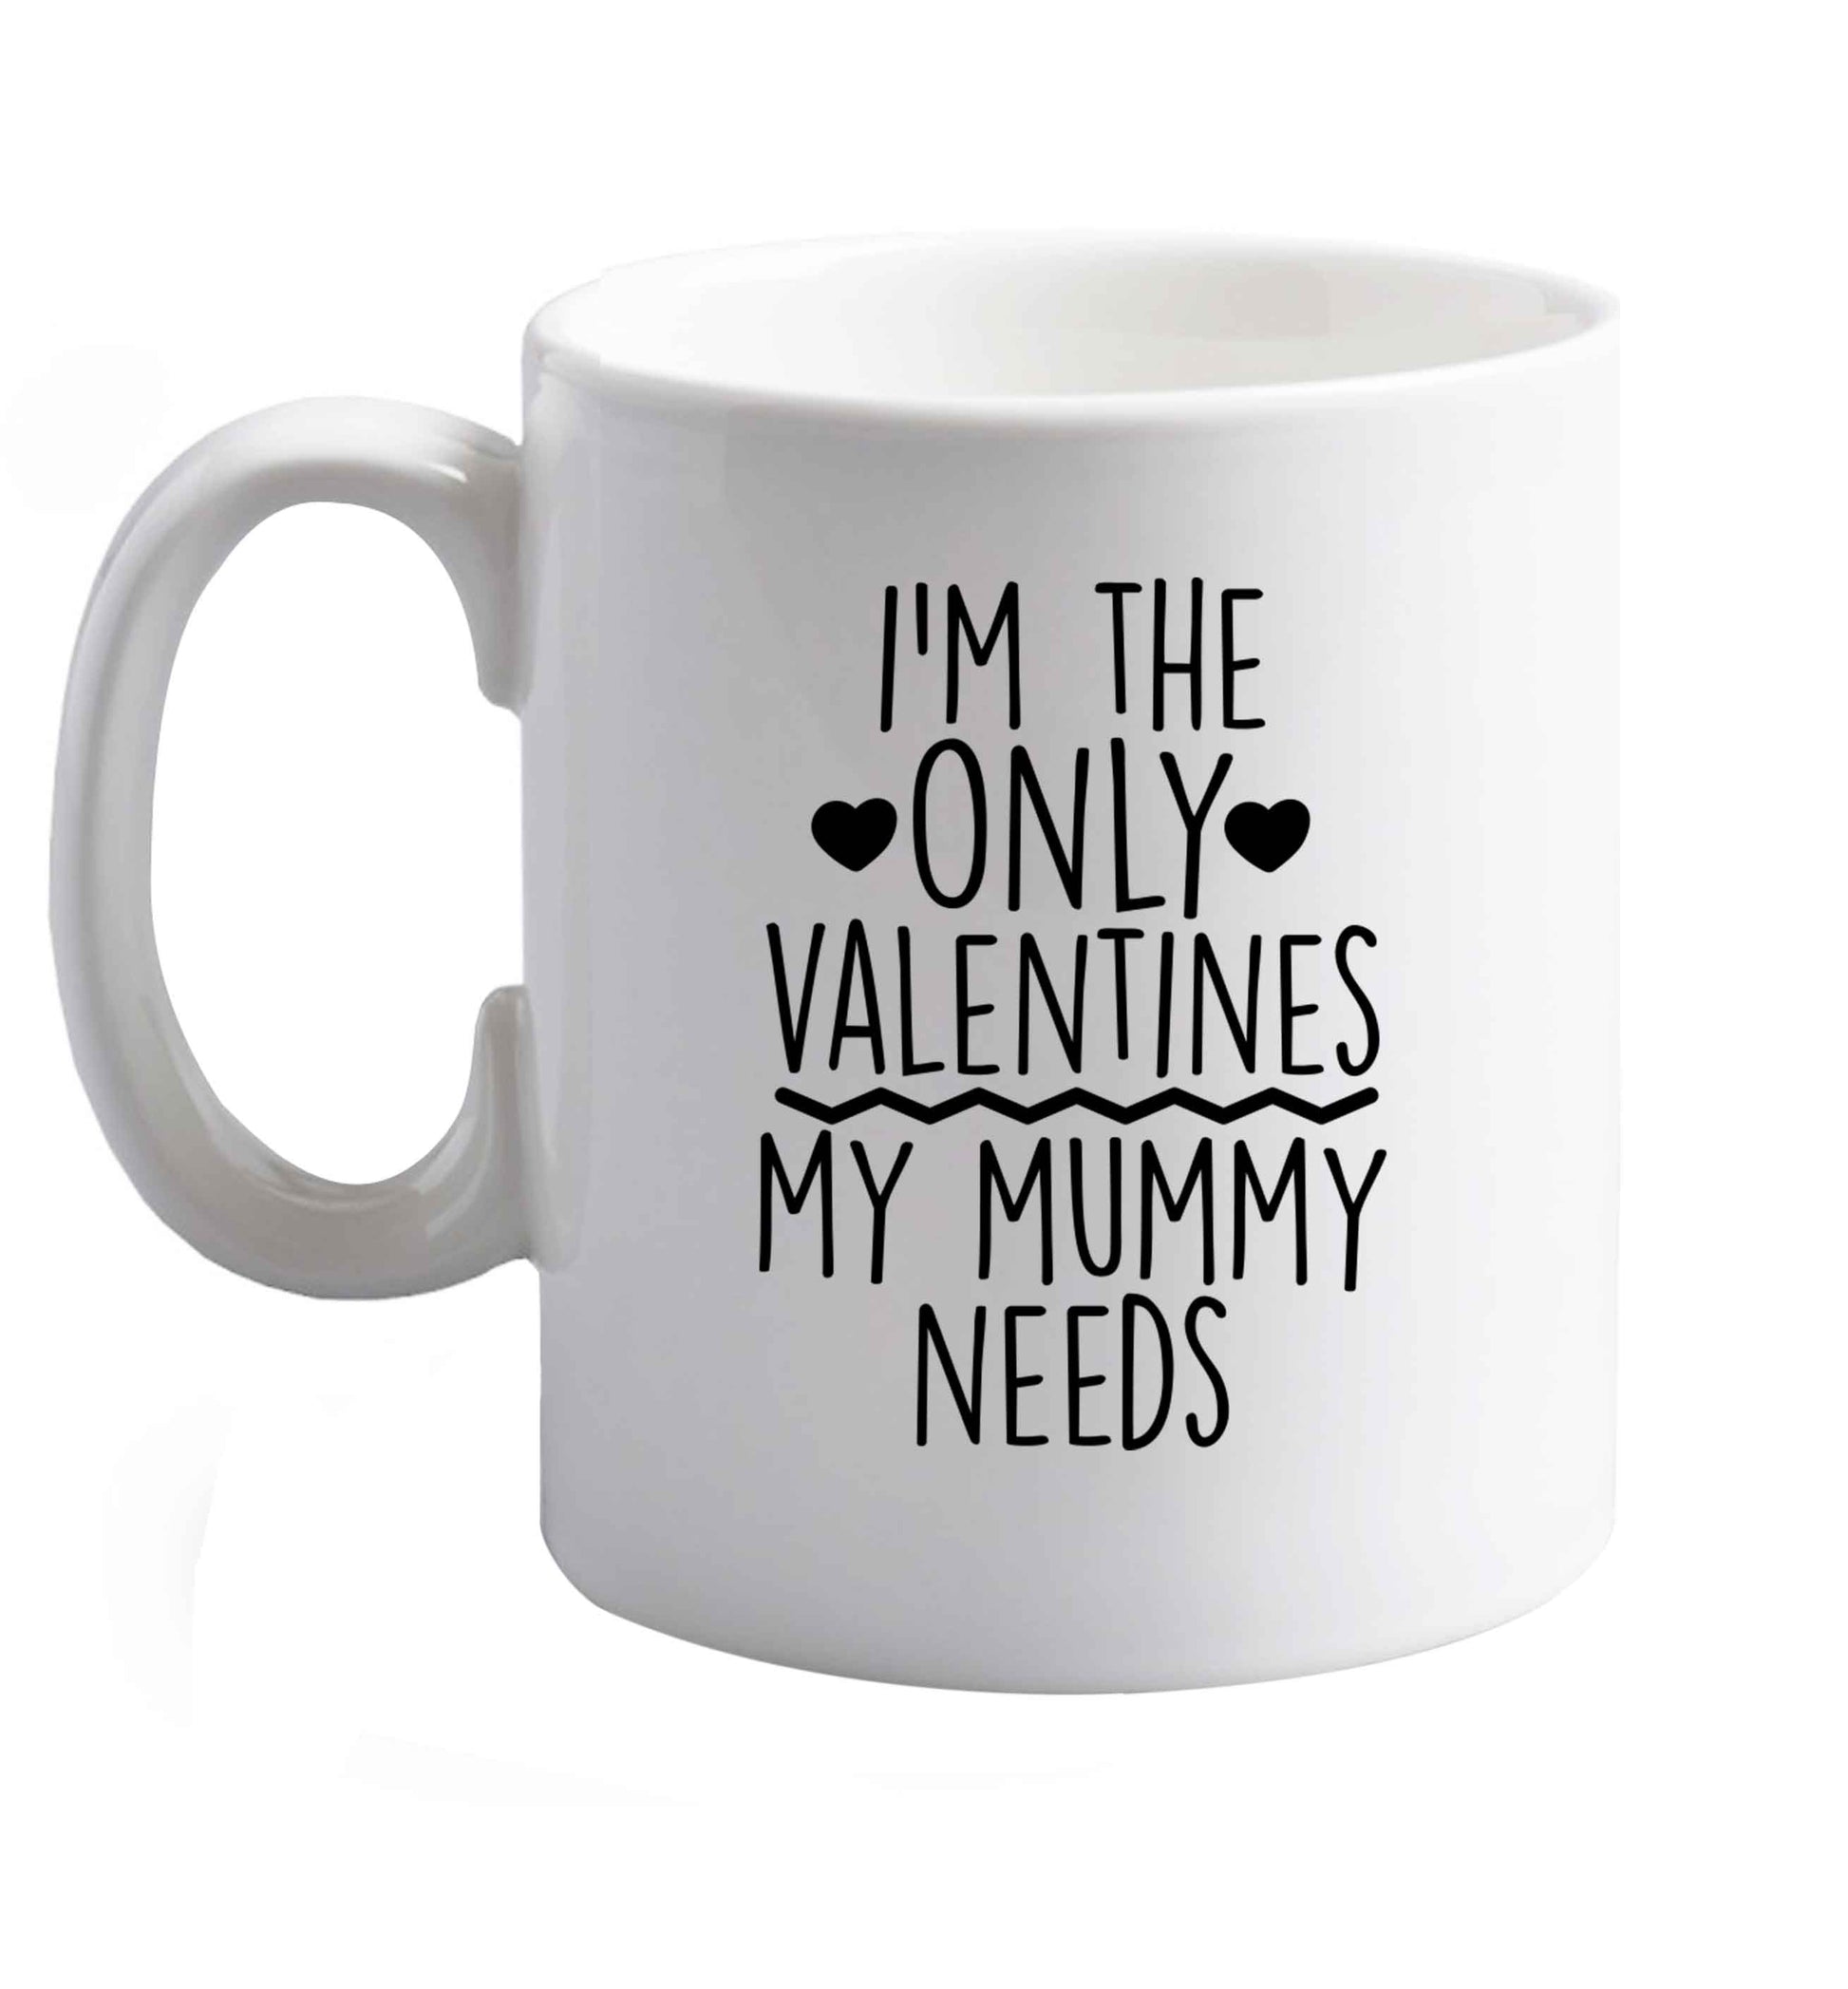 10 oz I'm the only valentines my mummy needs ceramic mug right handed